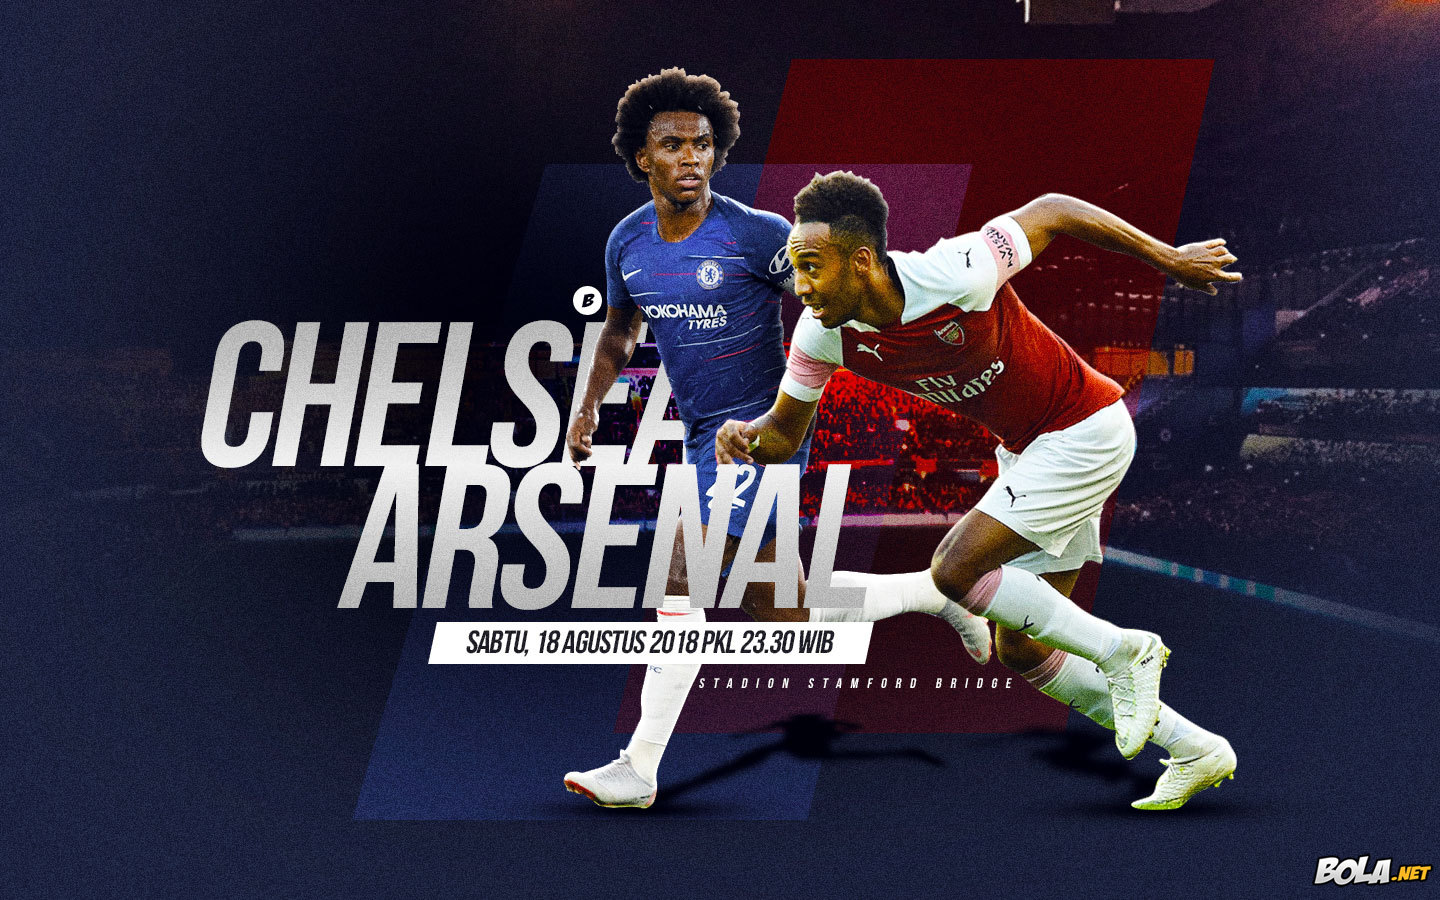 Deskripsi : Wallpaper Chelsea Vs Arsenal, size: 1440x900